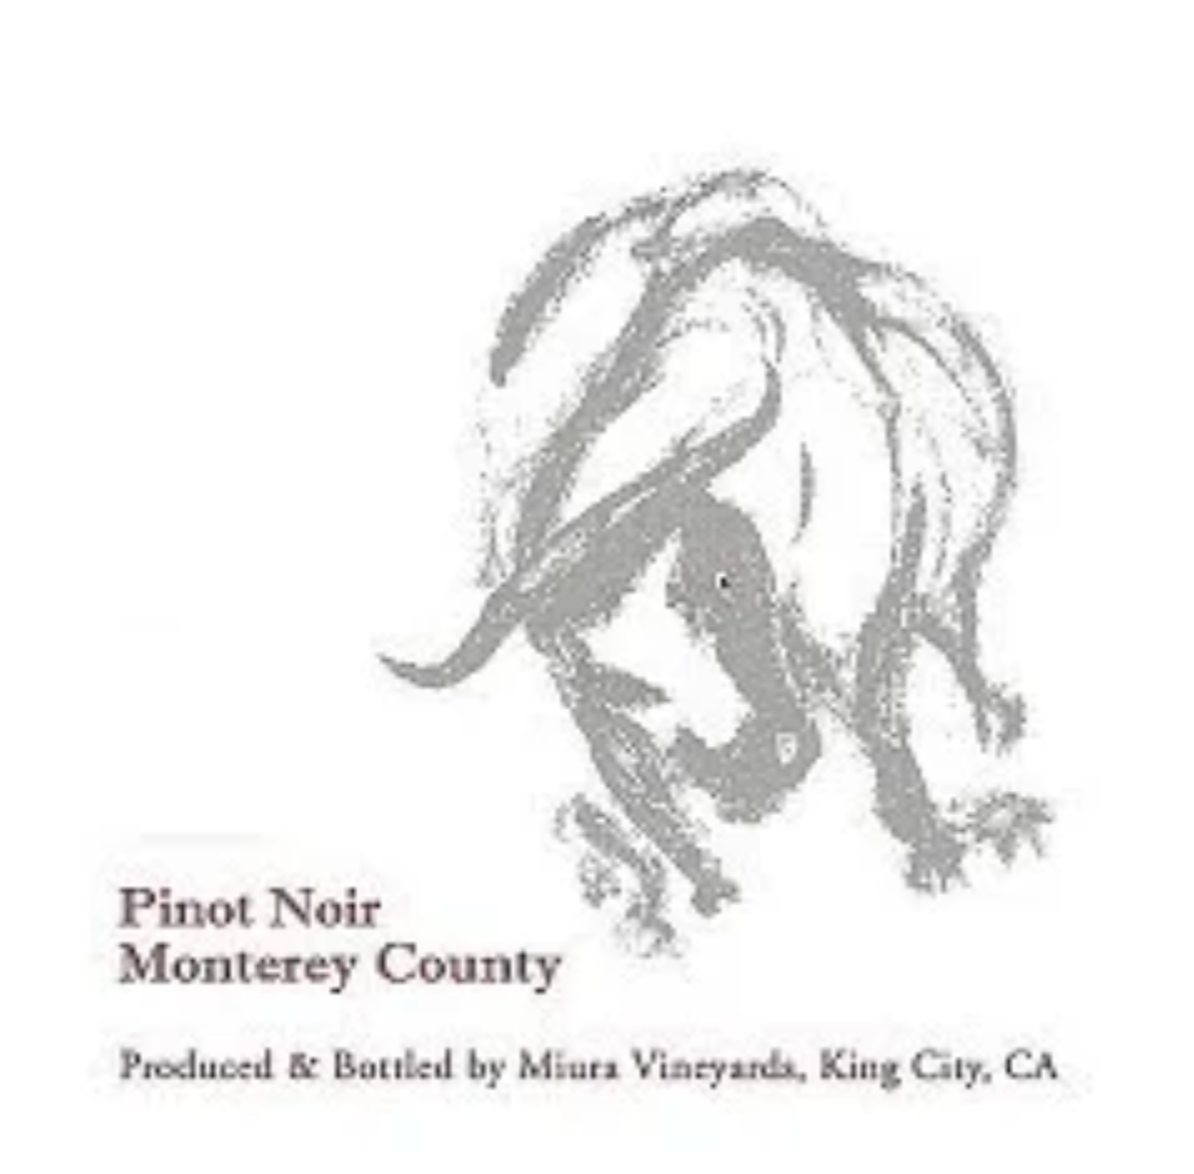 Miura Vineyards Pinot Noir (Monterey County)